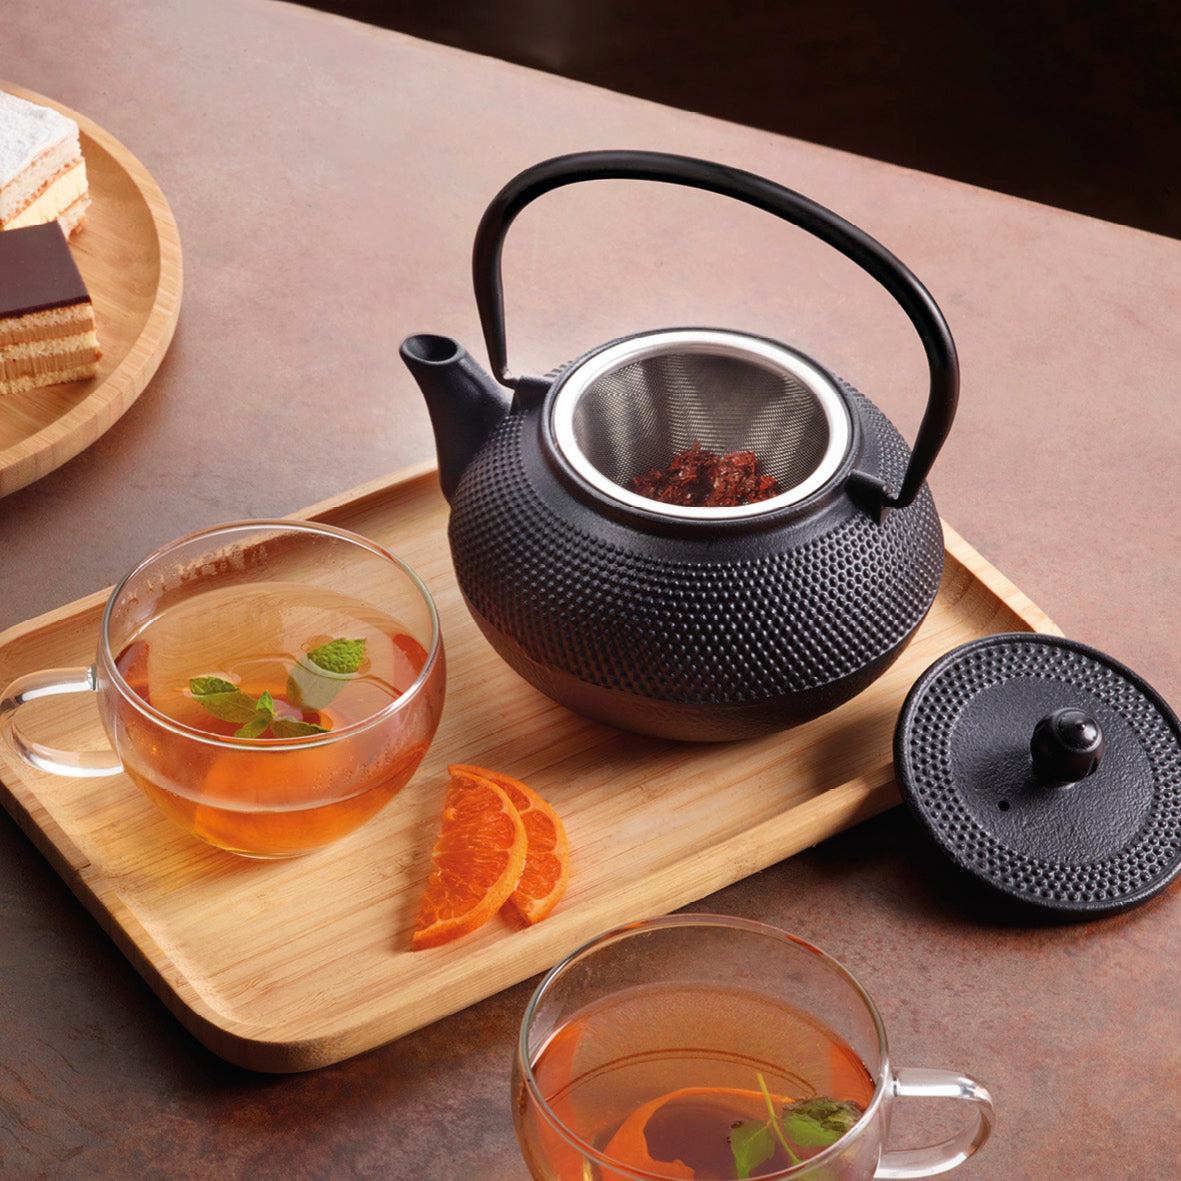 Cast iron tea pot 600 ml - Black